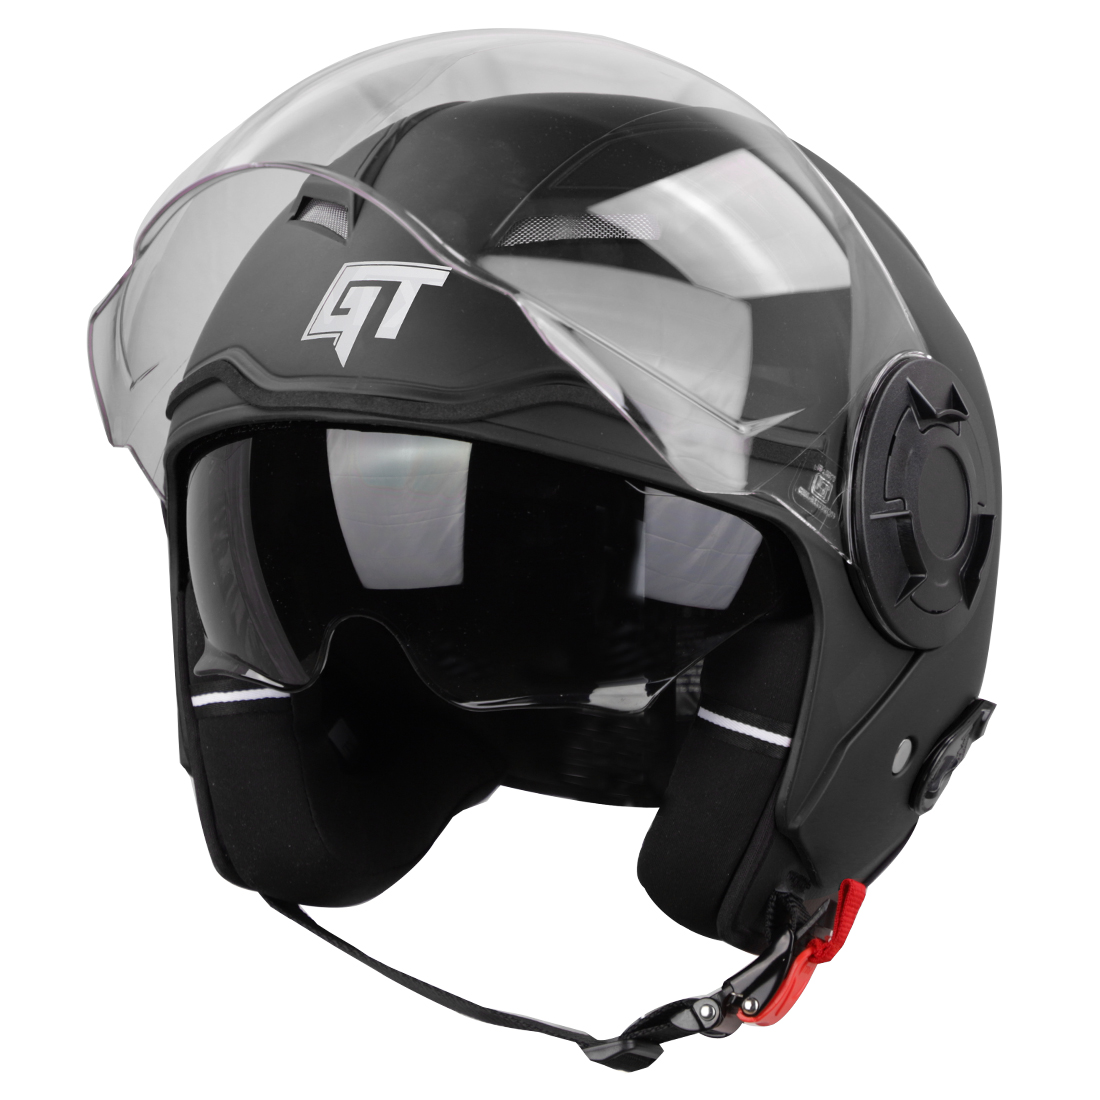 Steelbird GT ISI Certified Open Face Helmet For Men And Women With Inner Sun Shield ( Dual Visor Mechanism ) (Glossy Black)